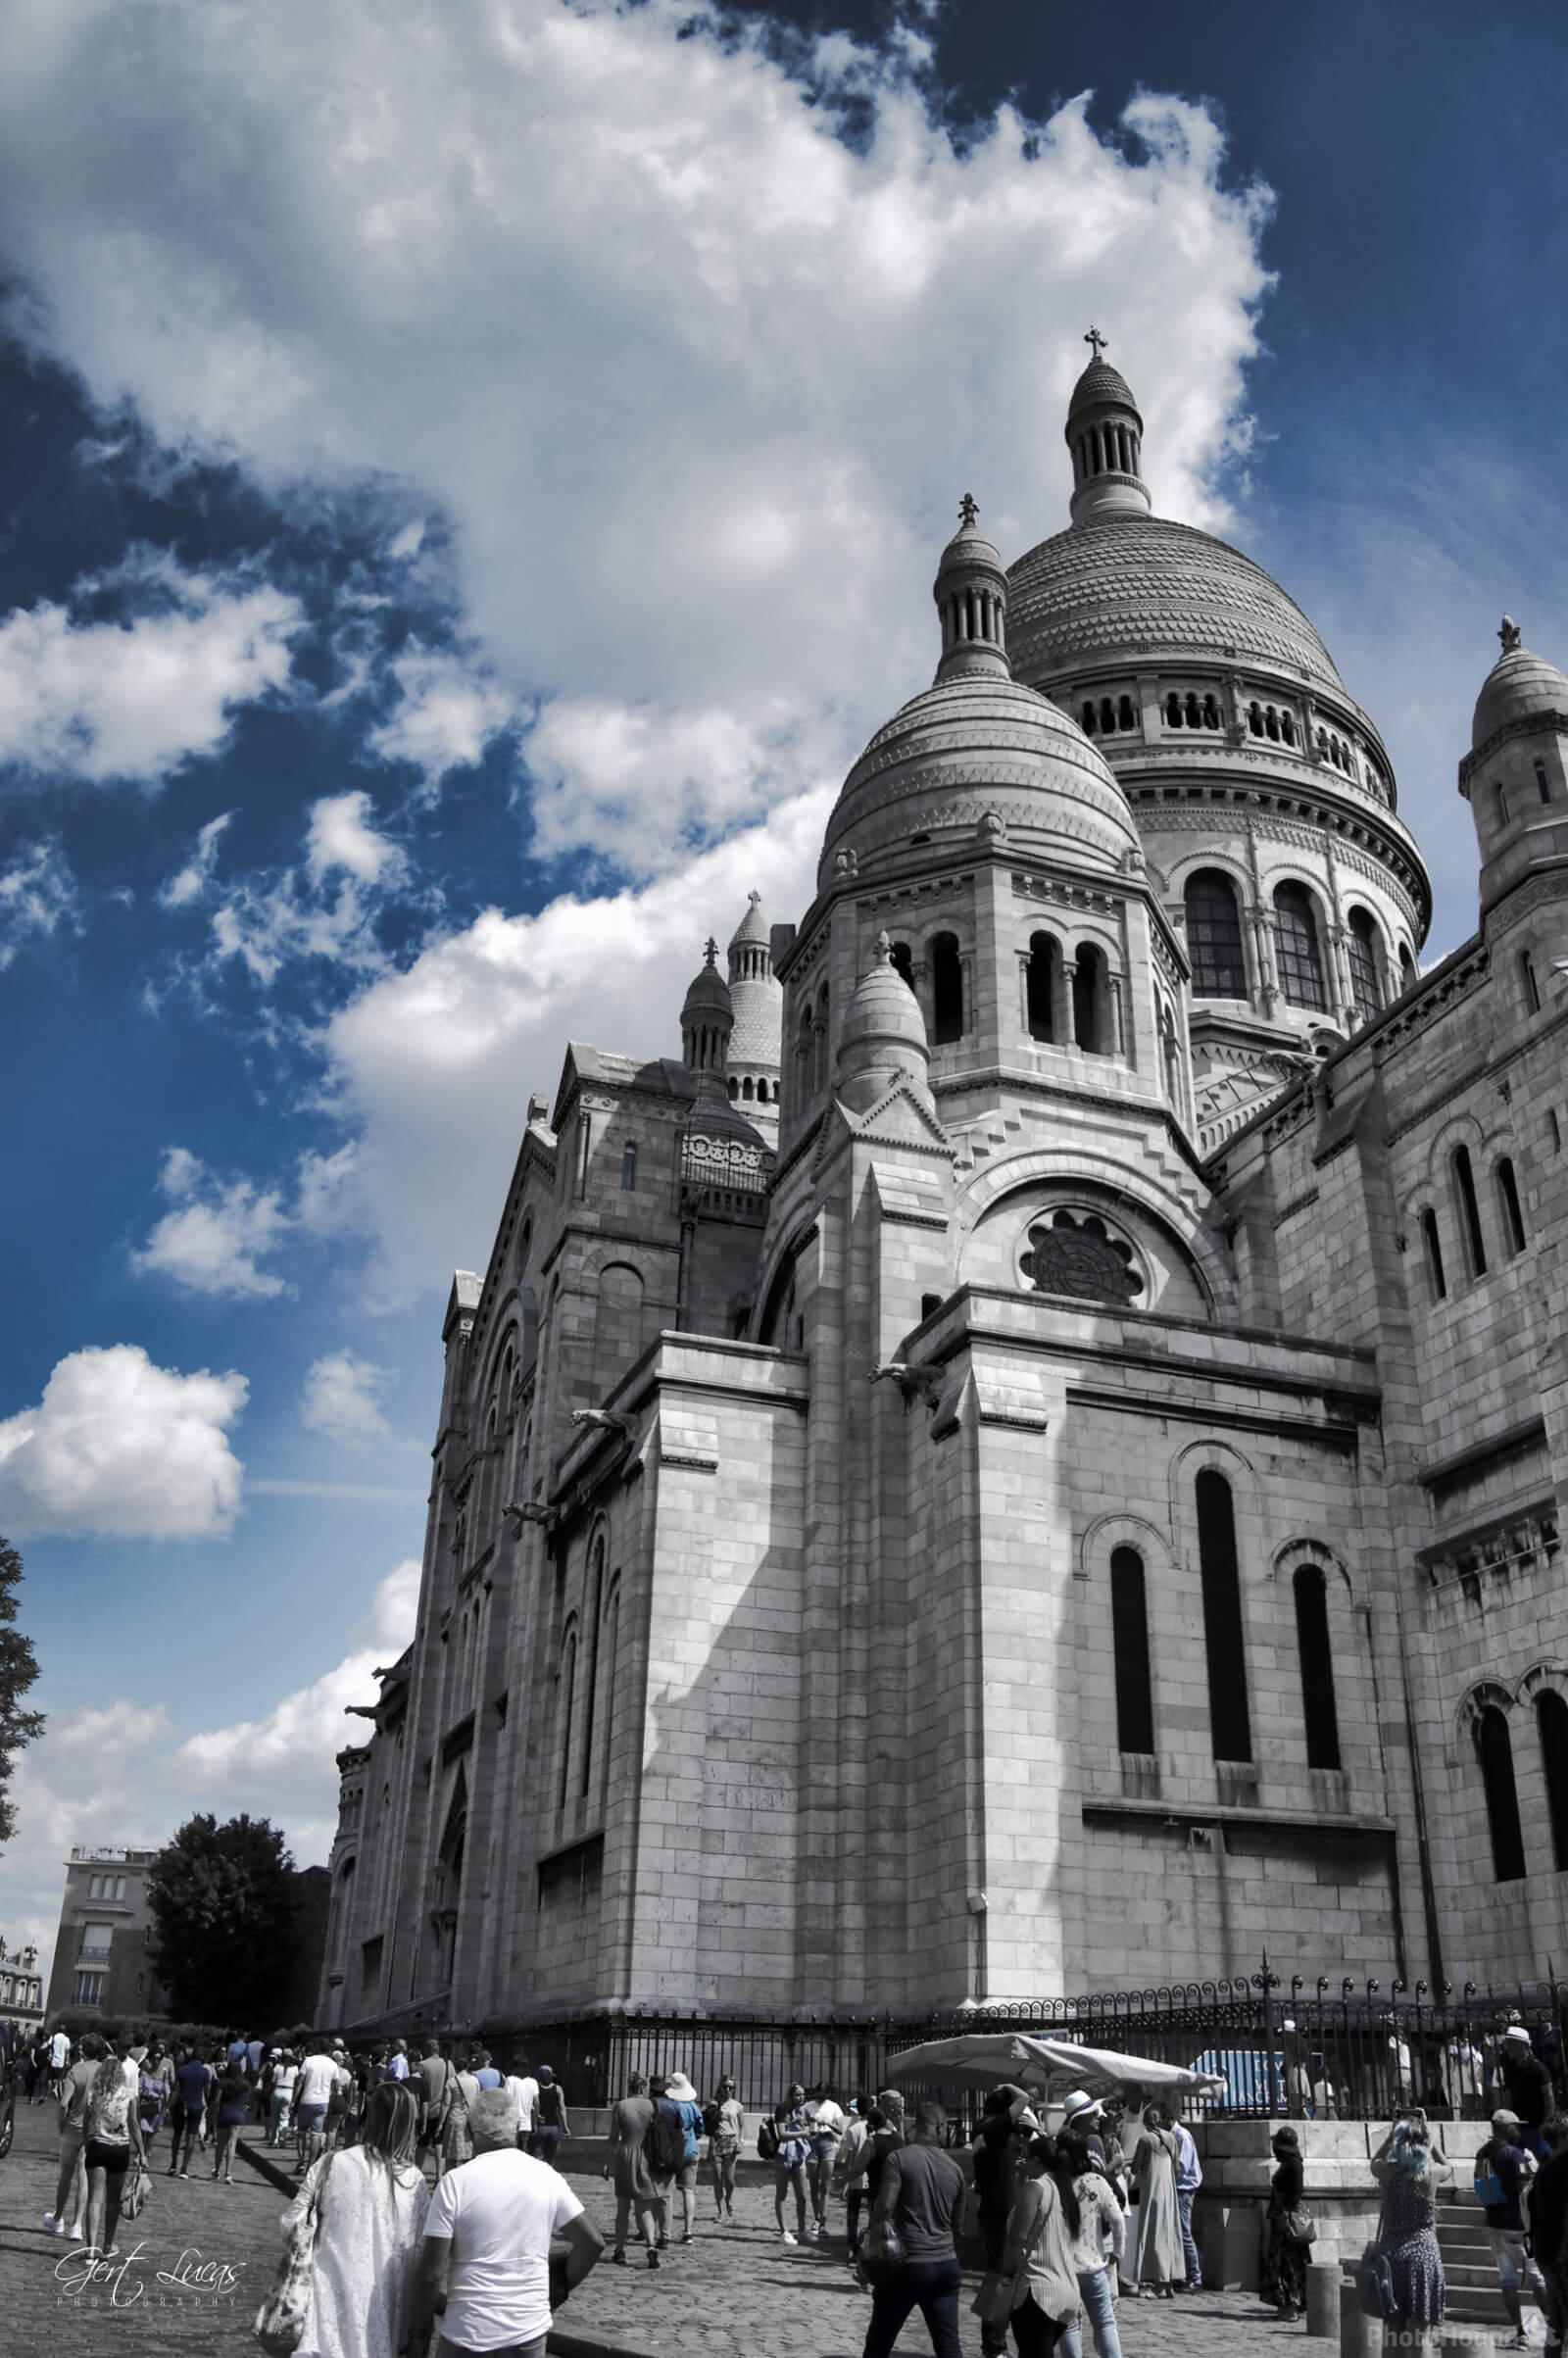 Image of Sacre Coeur, Paris by Gert Lucas